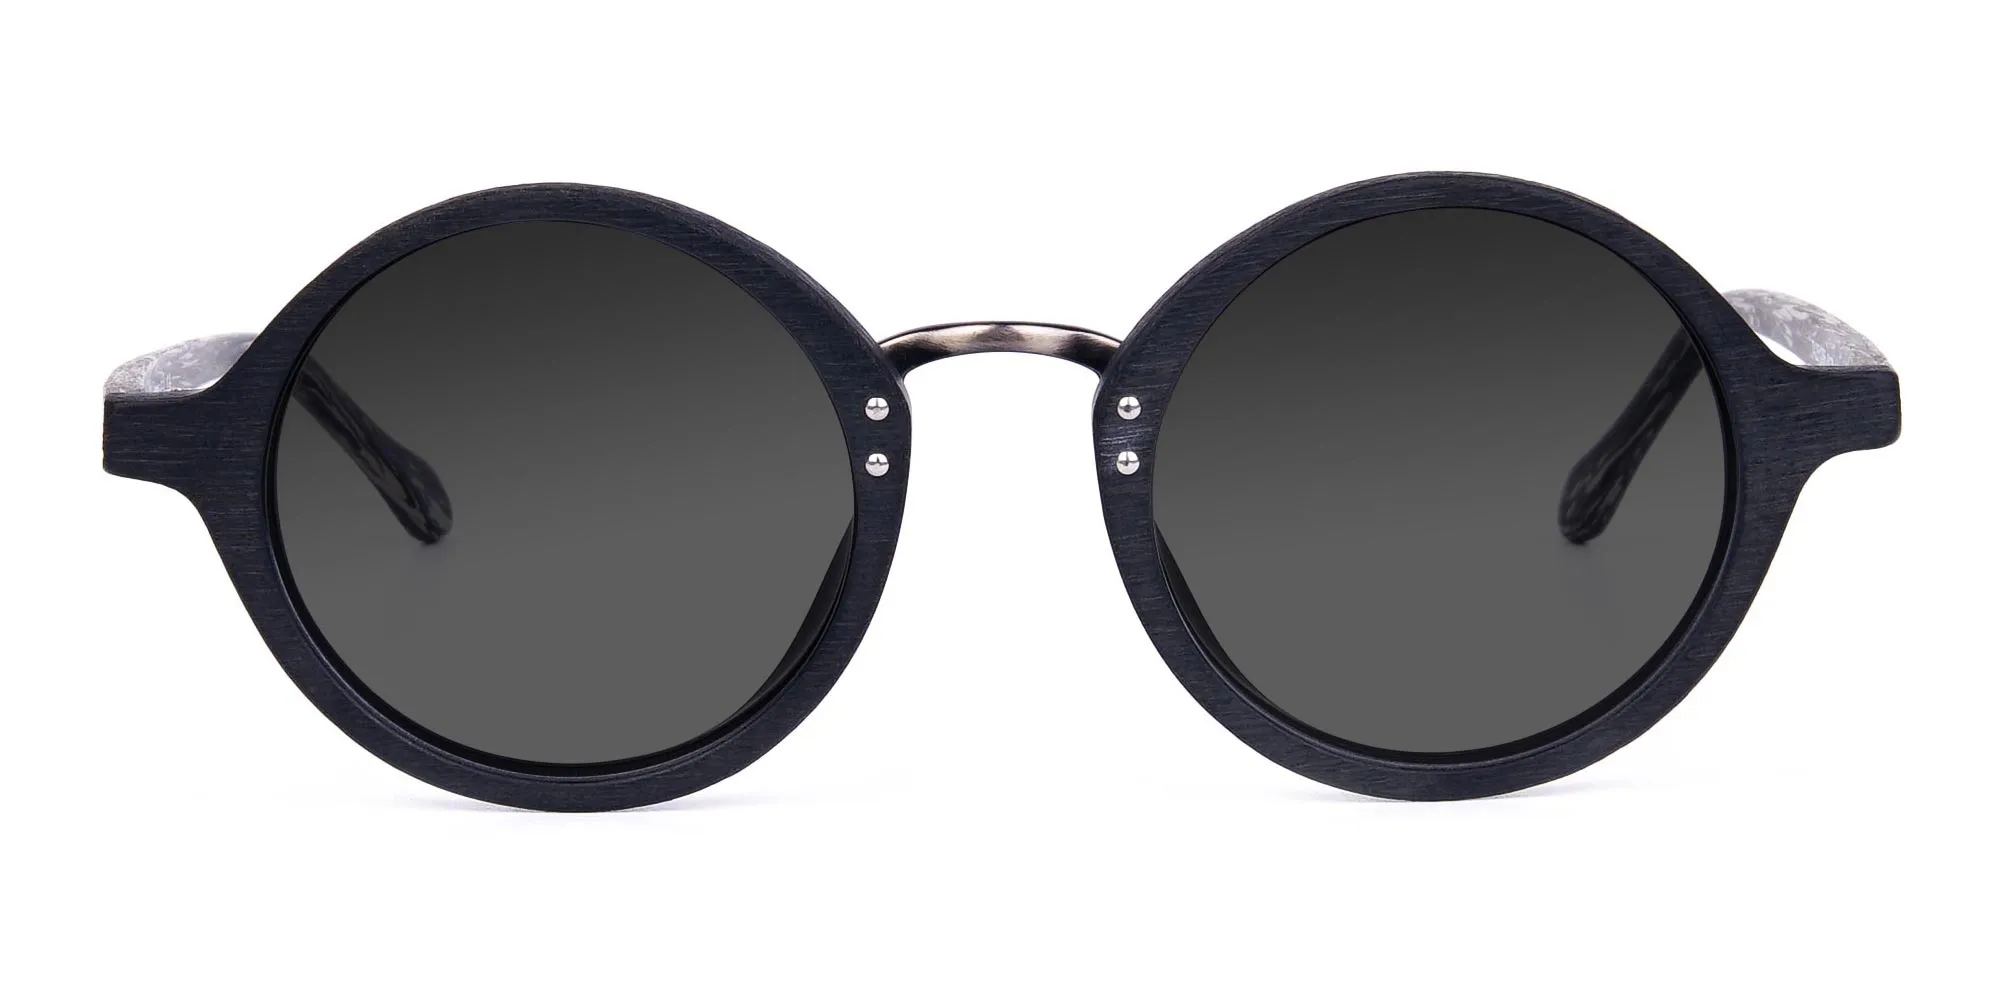 Black-Round-Wood-Sunglasses-with-Grey-Tint-2